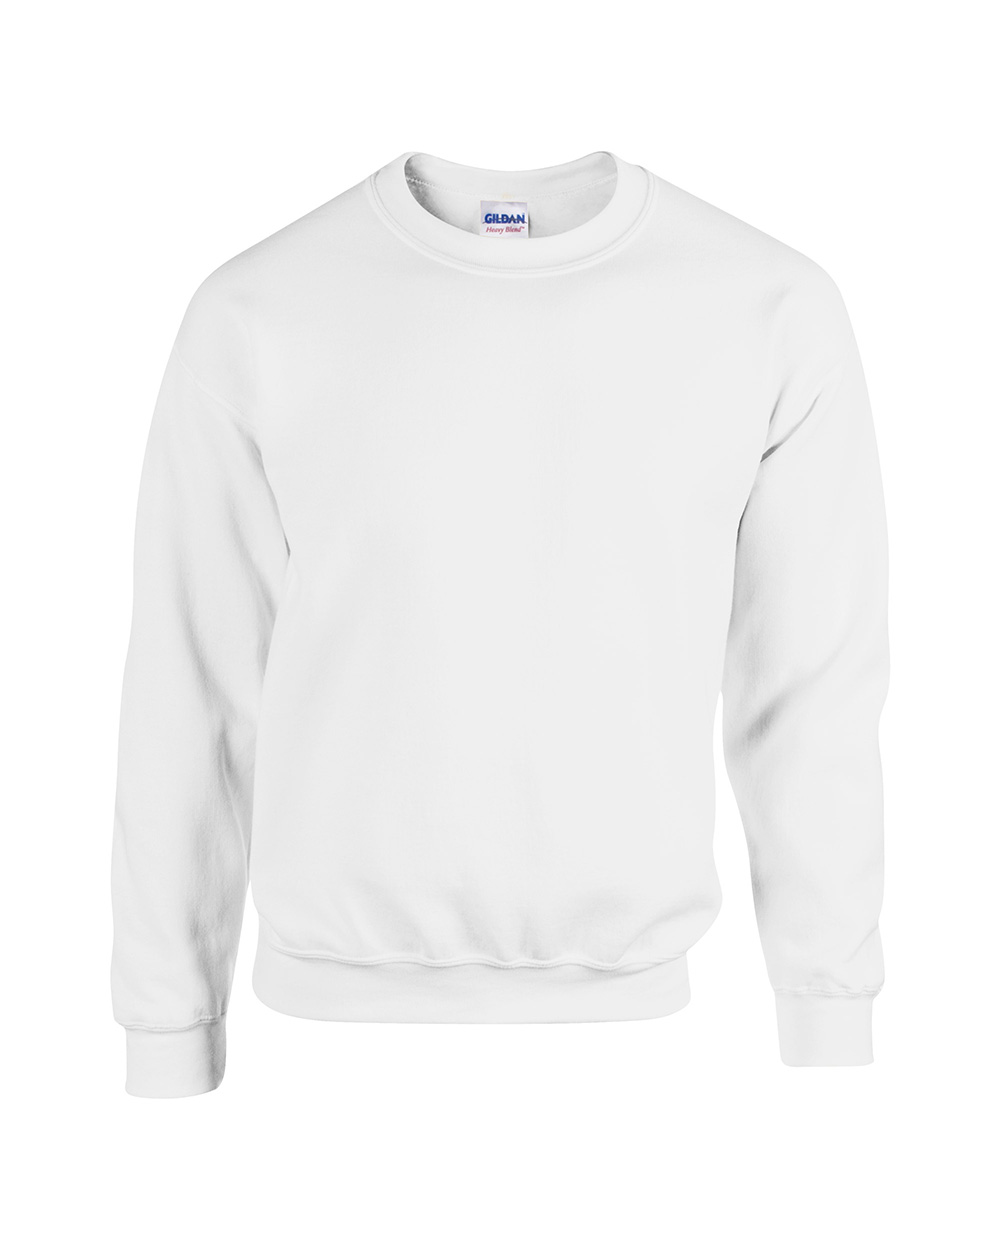 Araca Ink Australia Pty Ltd. Gildan Crewneck Sweatshirt 18000 - White